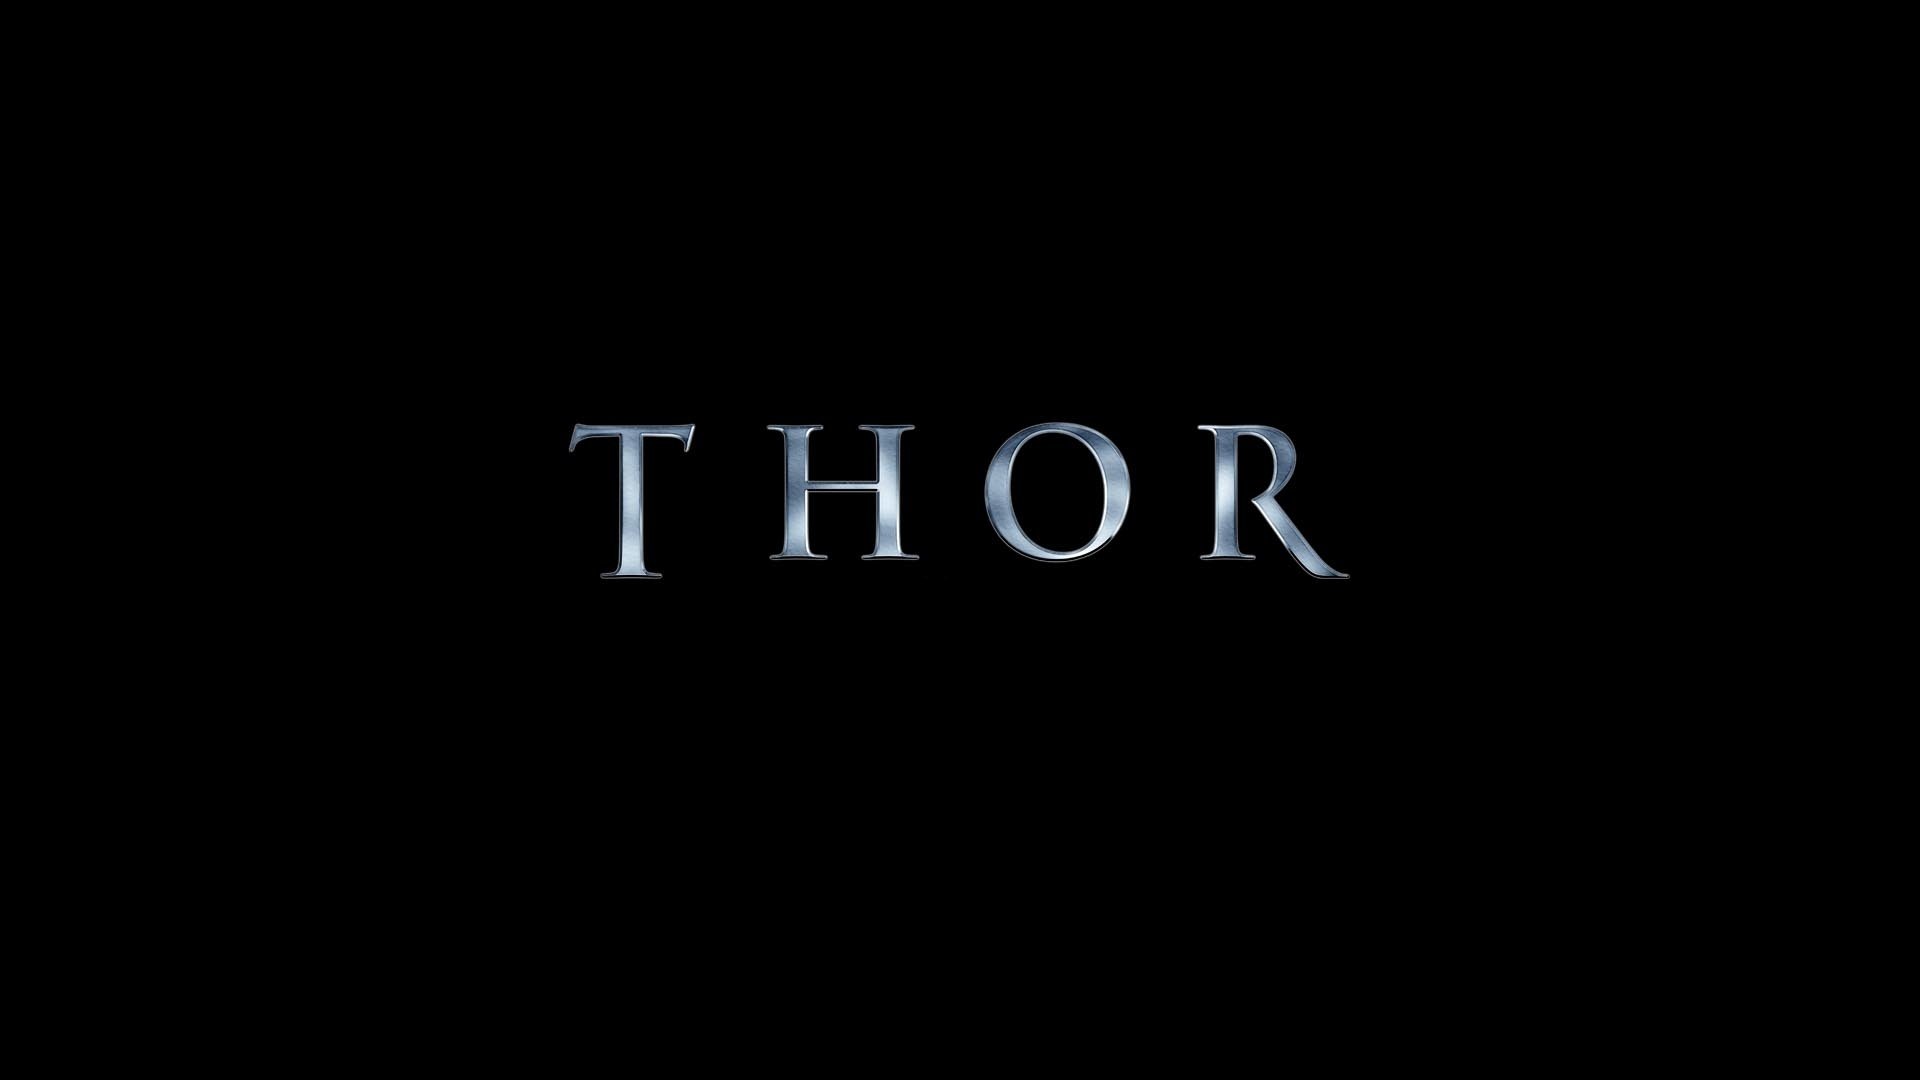 Thor Avengers Chest by redknightz01 on DeviantArt